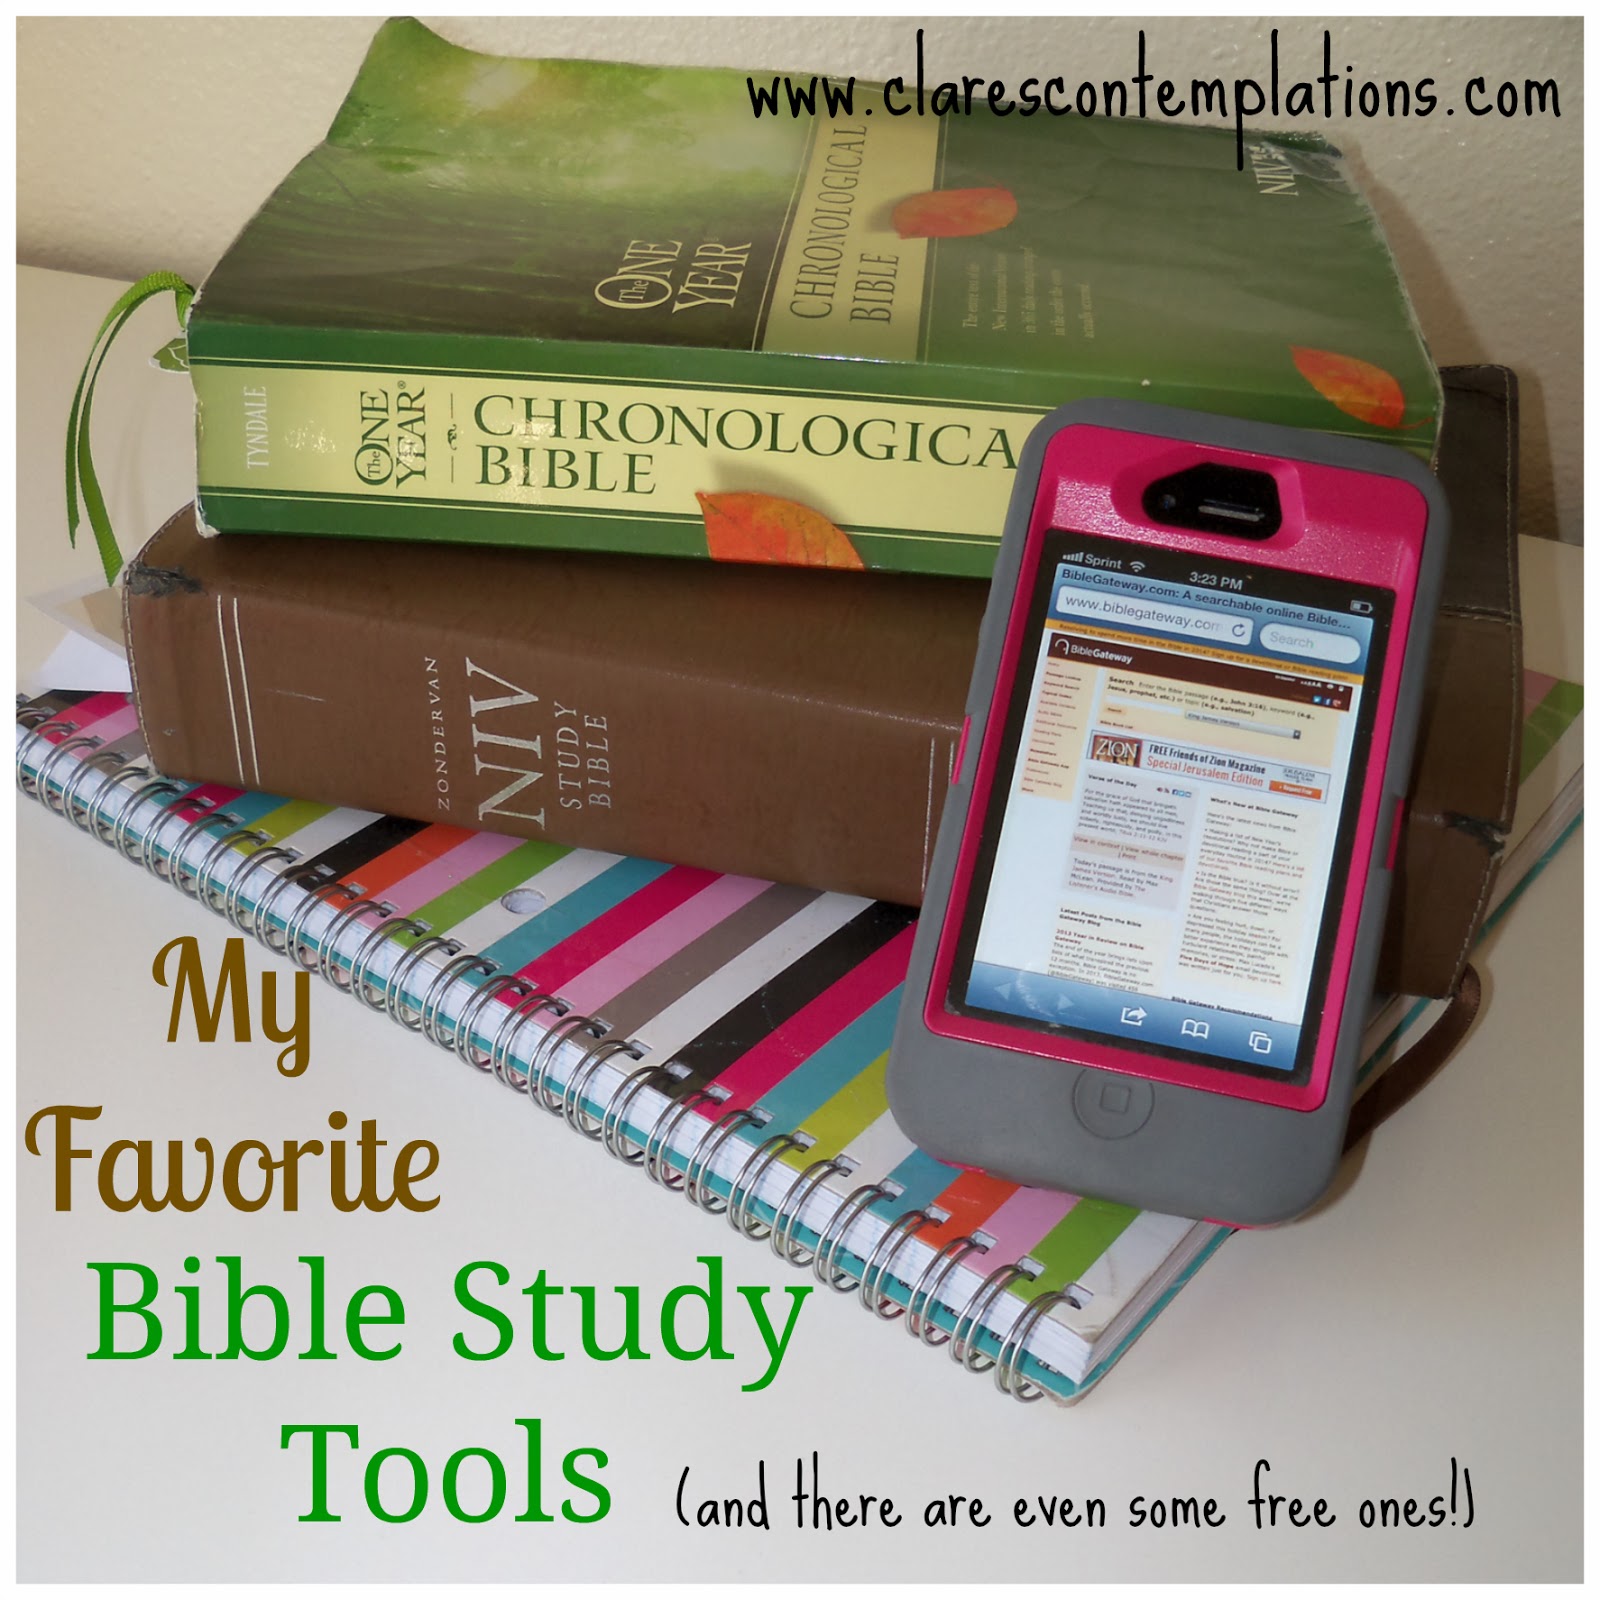 http://www.clarescontemplations.com/2014/01/my-favorite-bible-study-tools.html